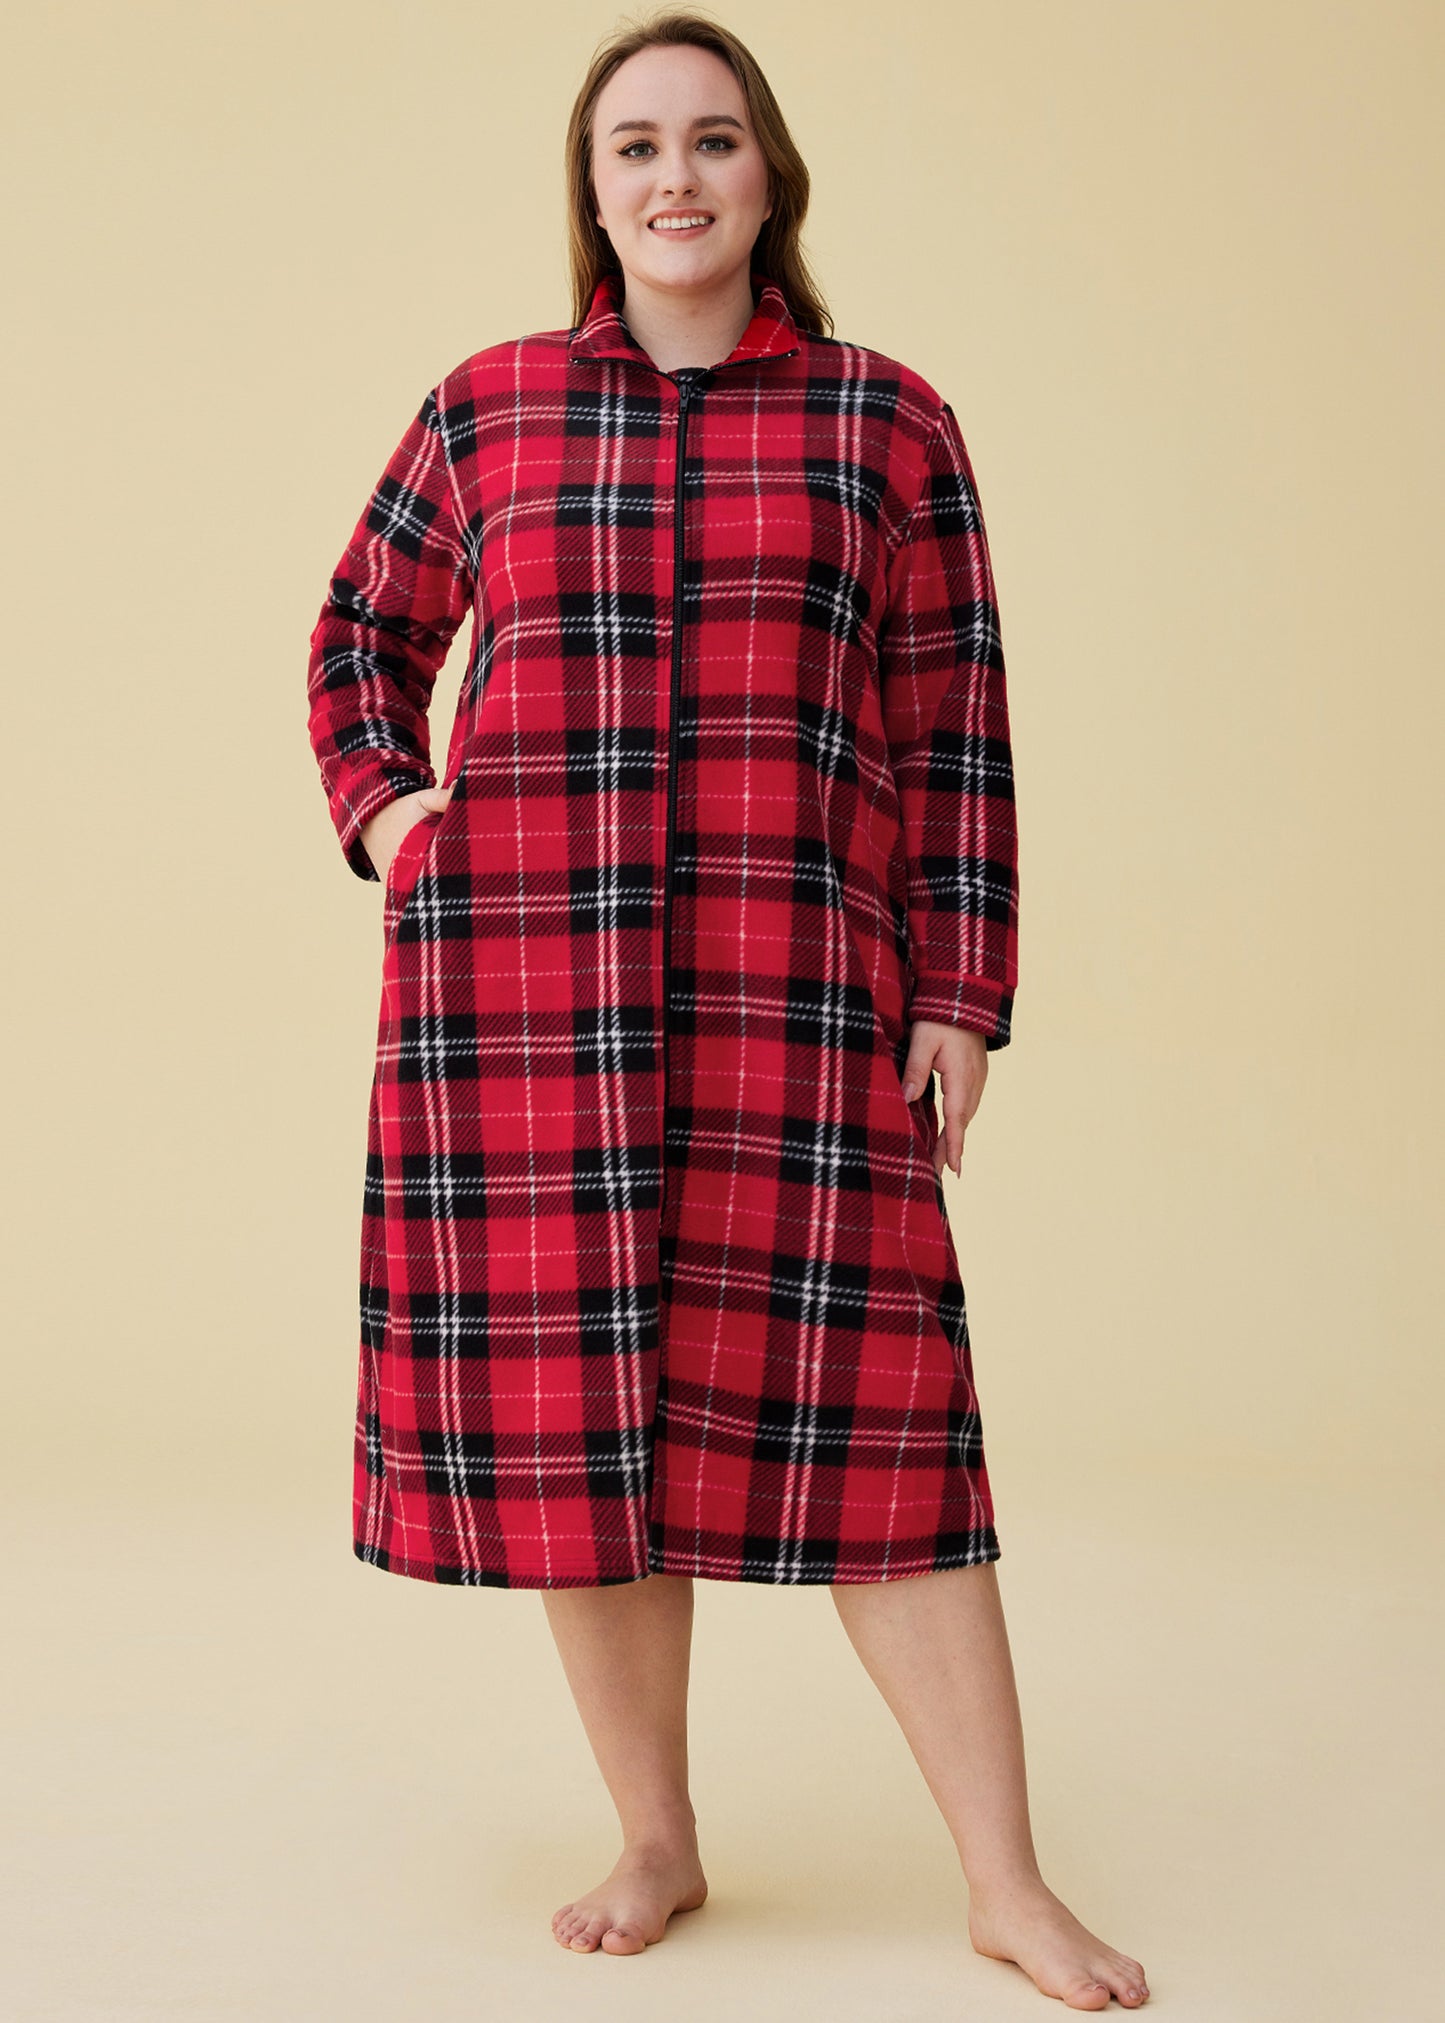 Women's Fleece Zipper Robe Long Sleeves Bathrobe with Pockets